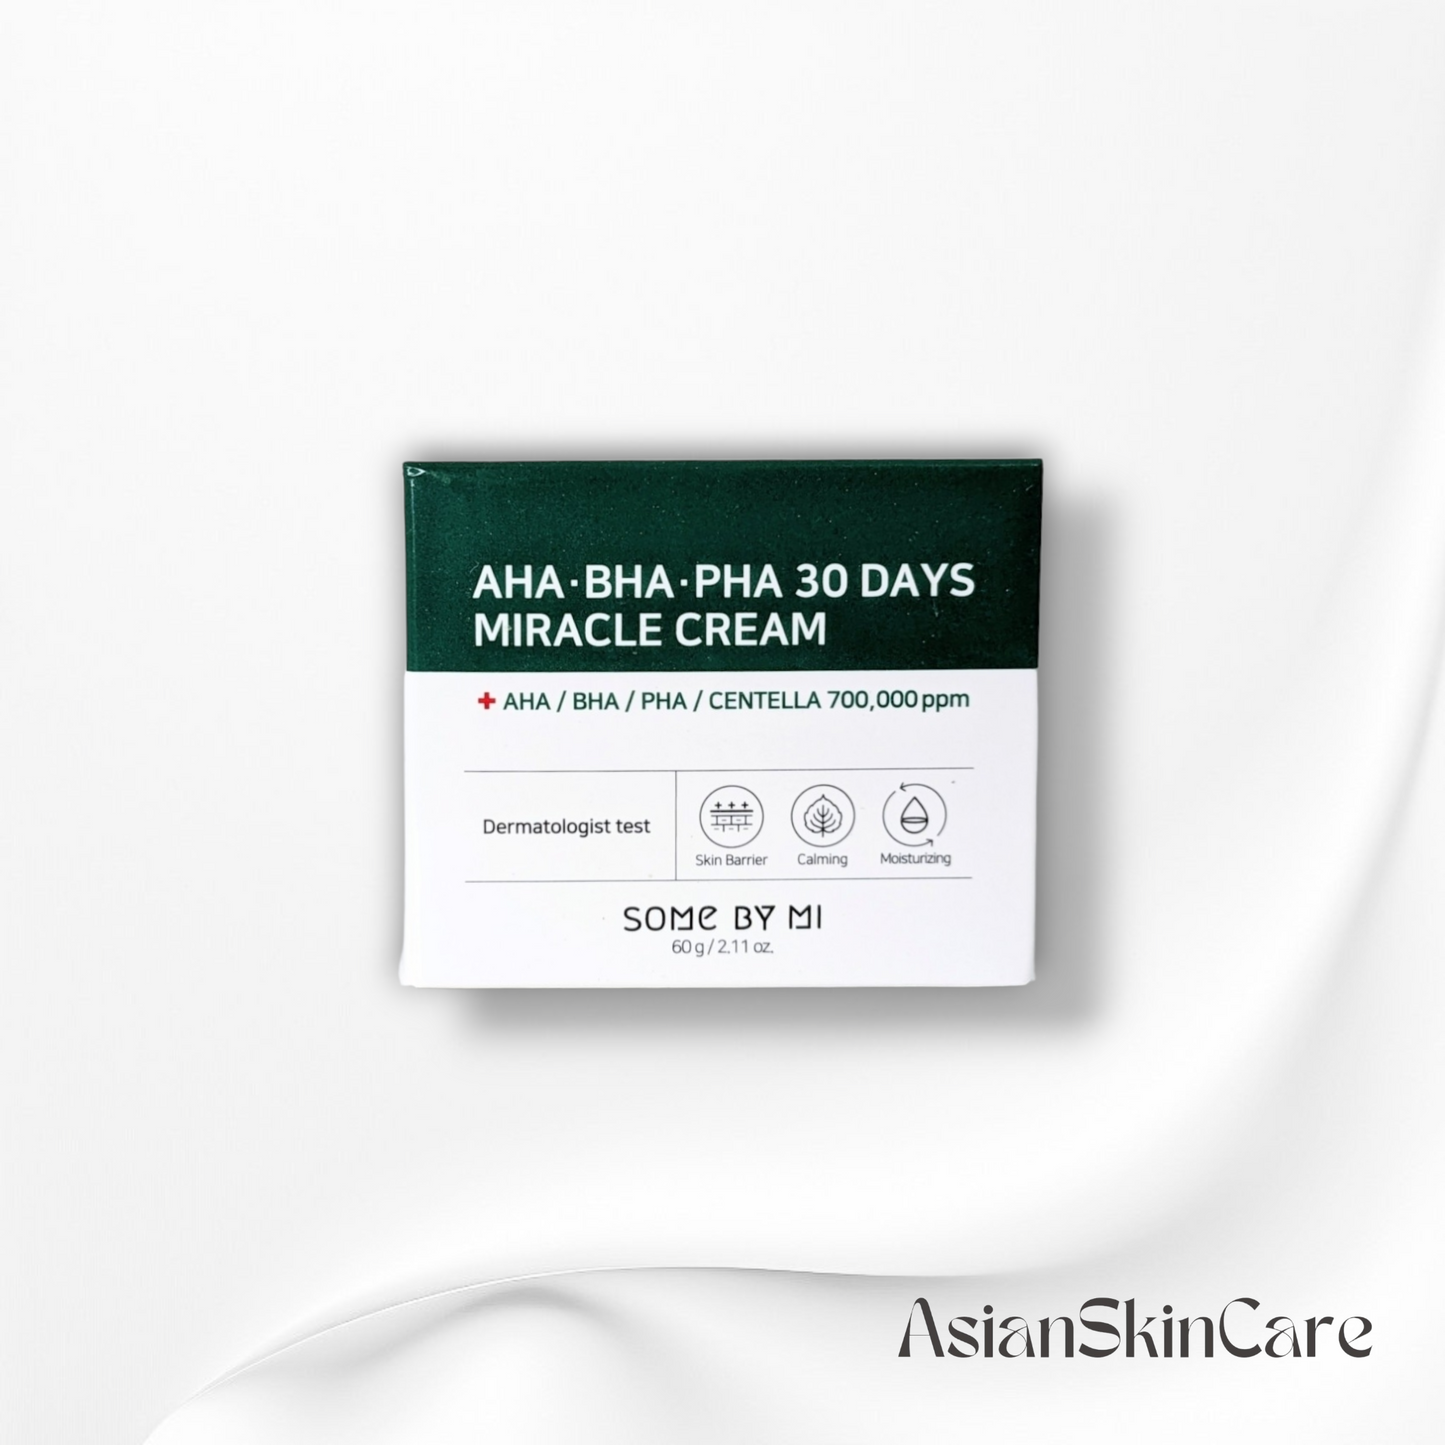 SOME BY MI - AHA, BHA, PHA 30 Days Miracle Cream - 60g